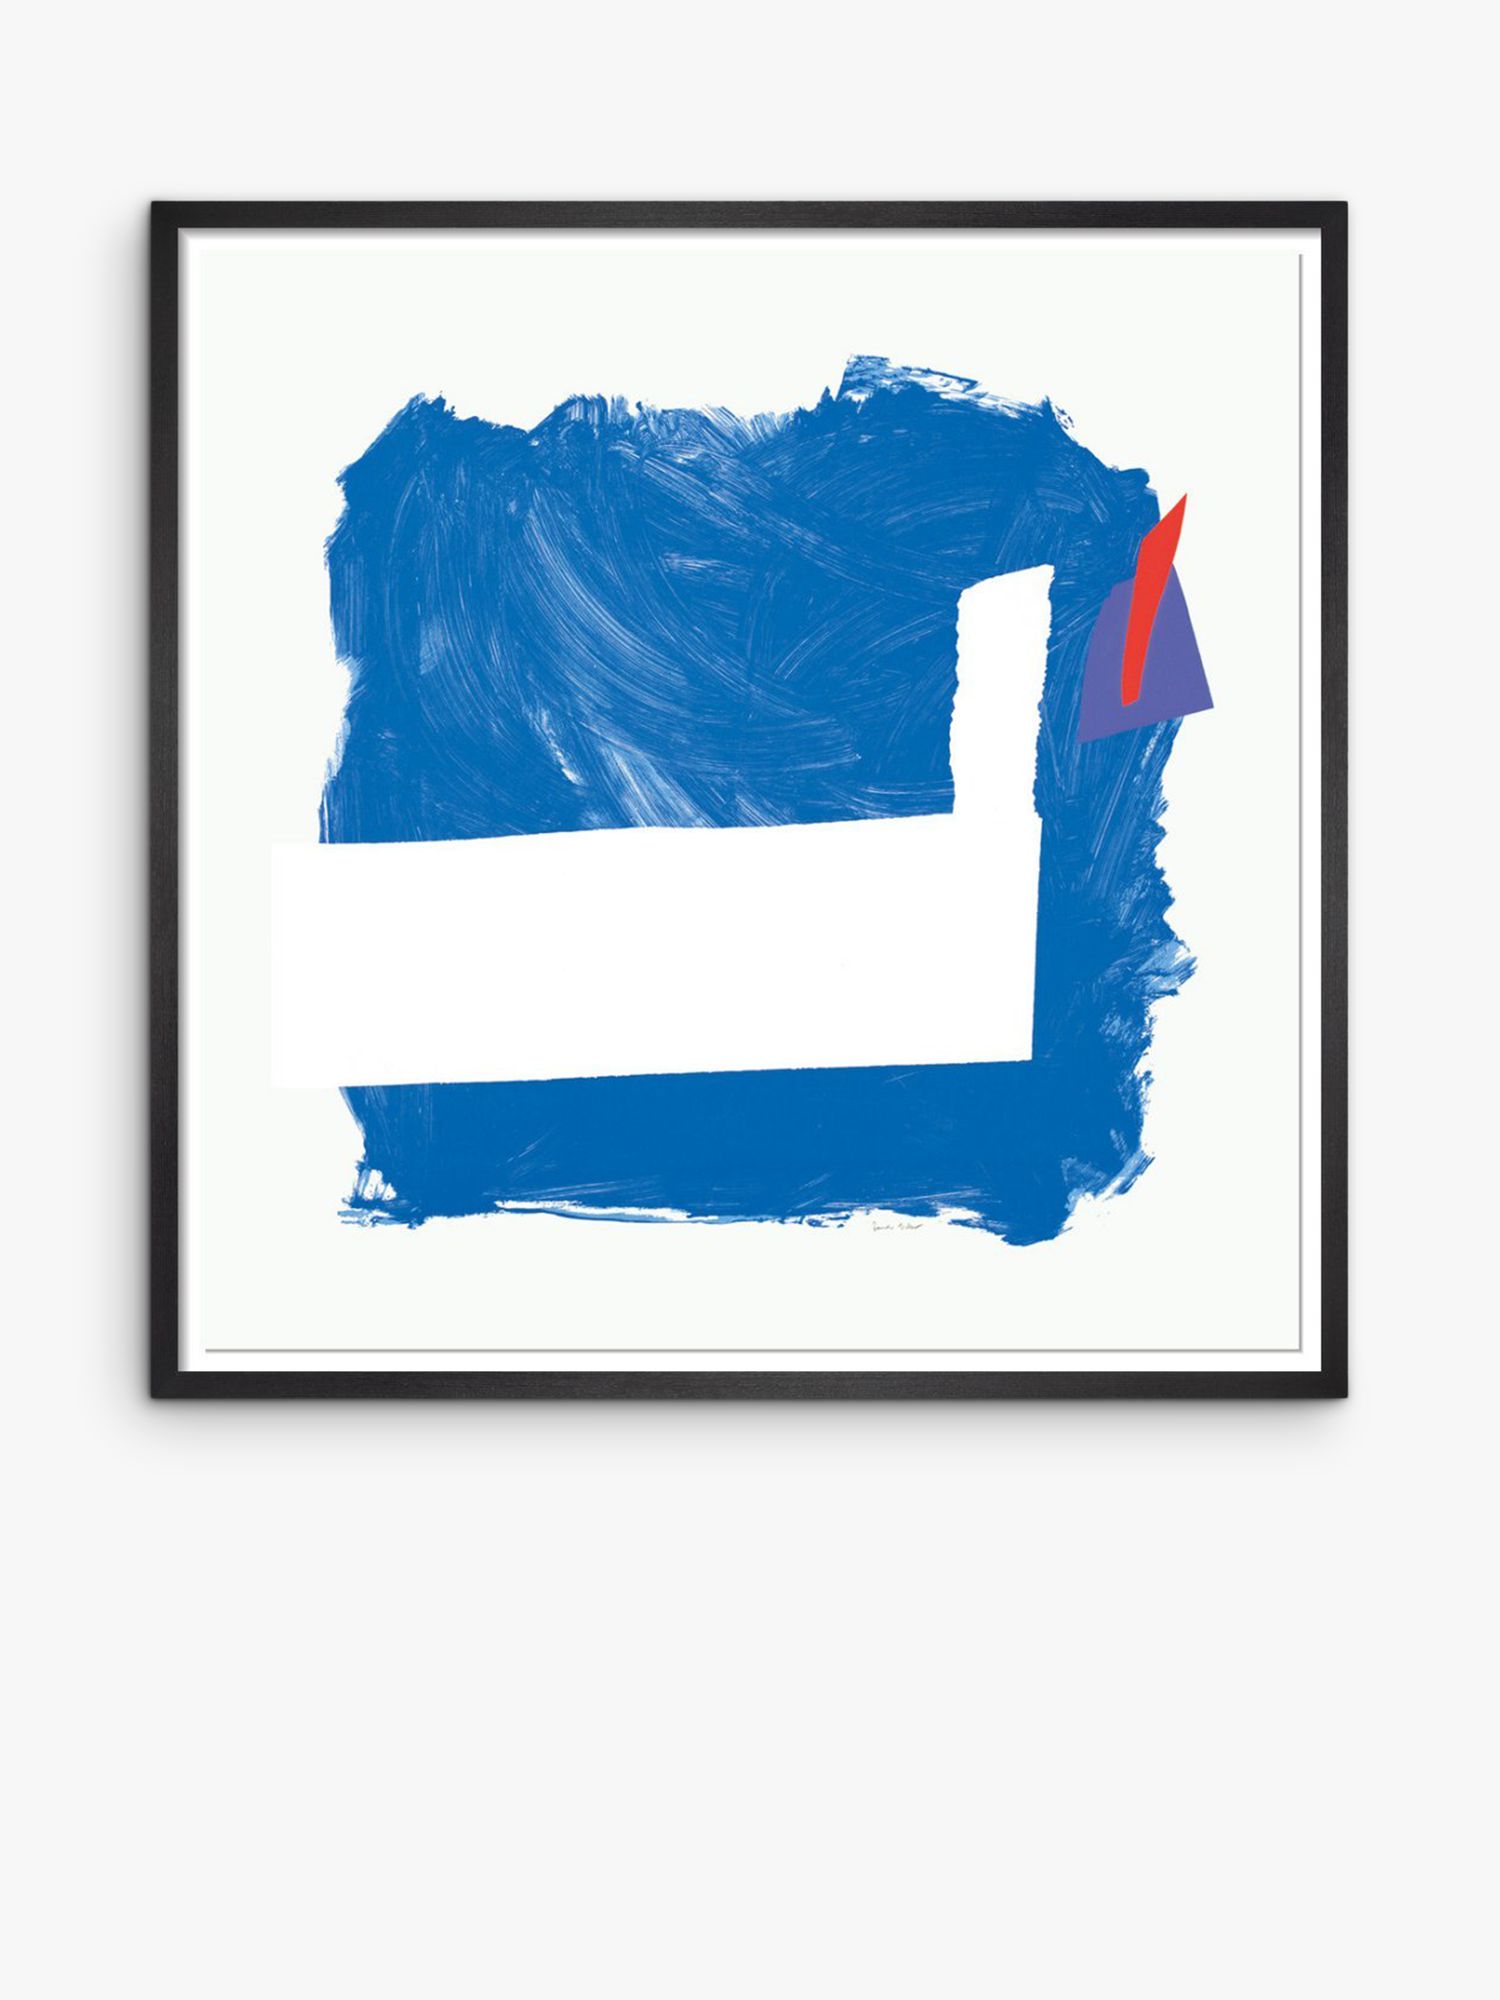 Royal Academy - Sandra Blow 'Side Effect' Framed Print, 105 x 105cm, Blue